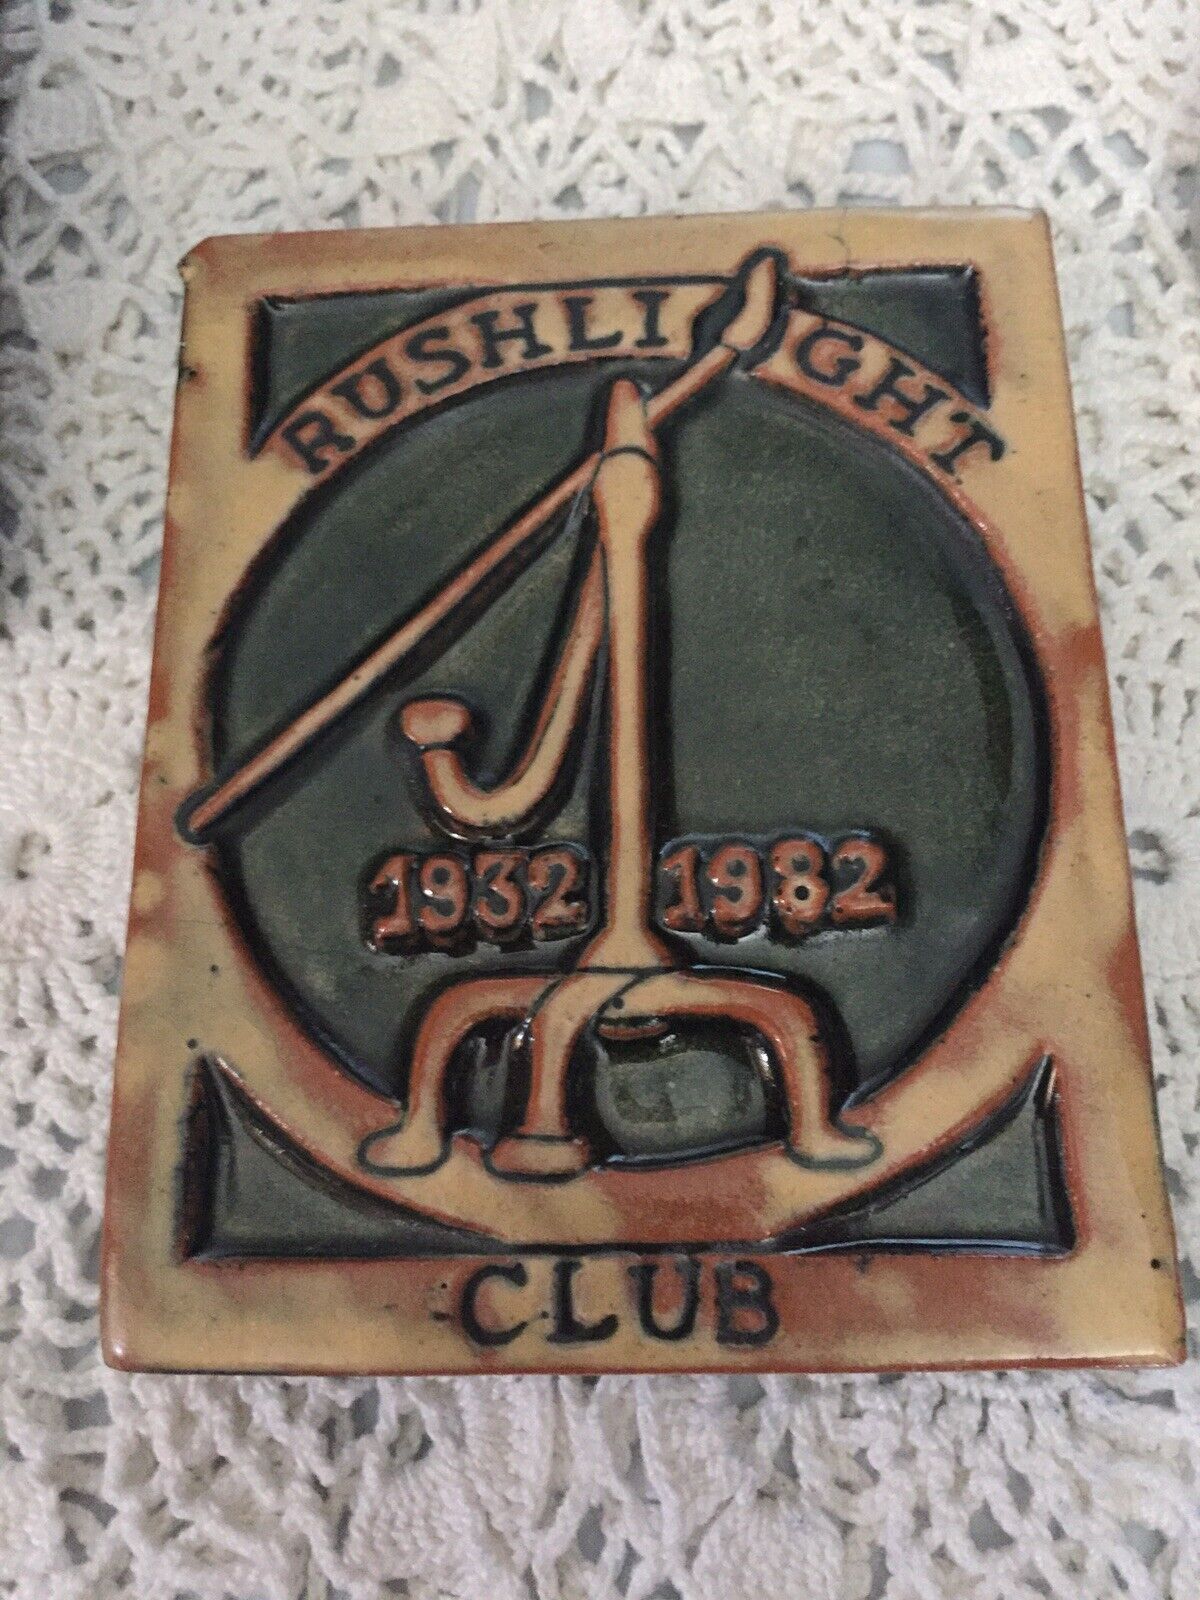 Vintage Rush Light Club 50th Anniversary Ceramic Tile 1982